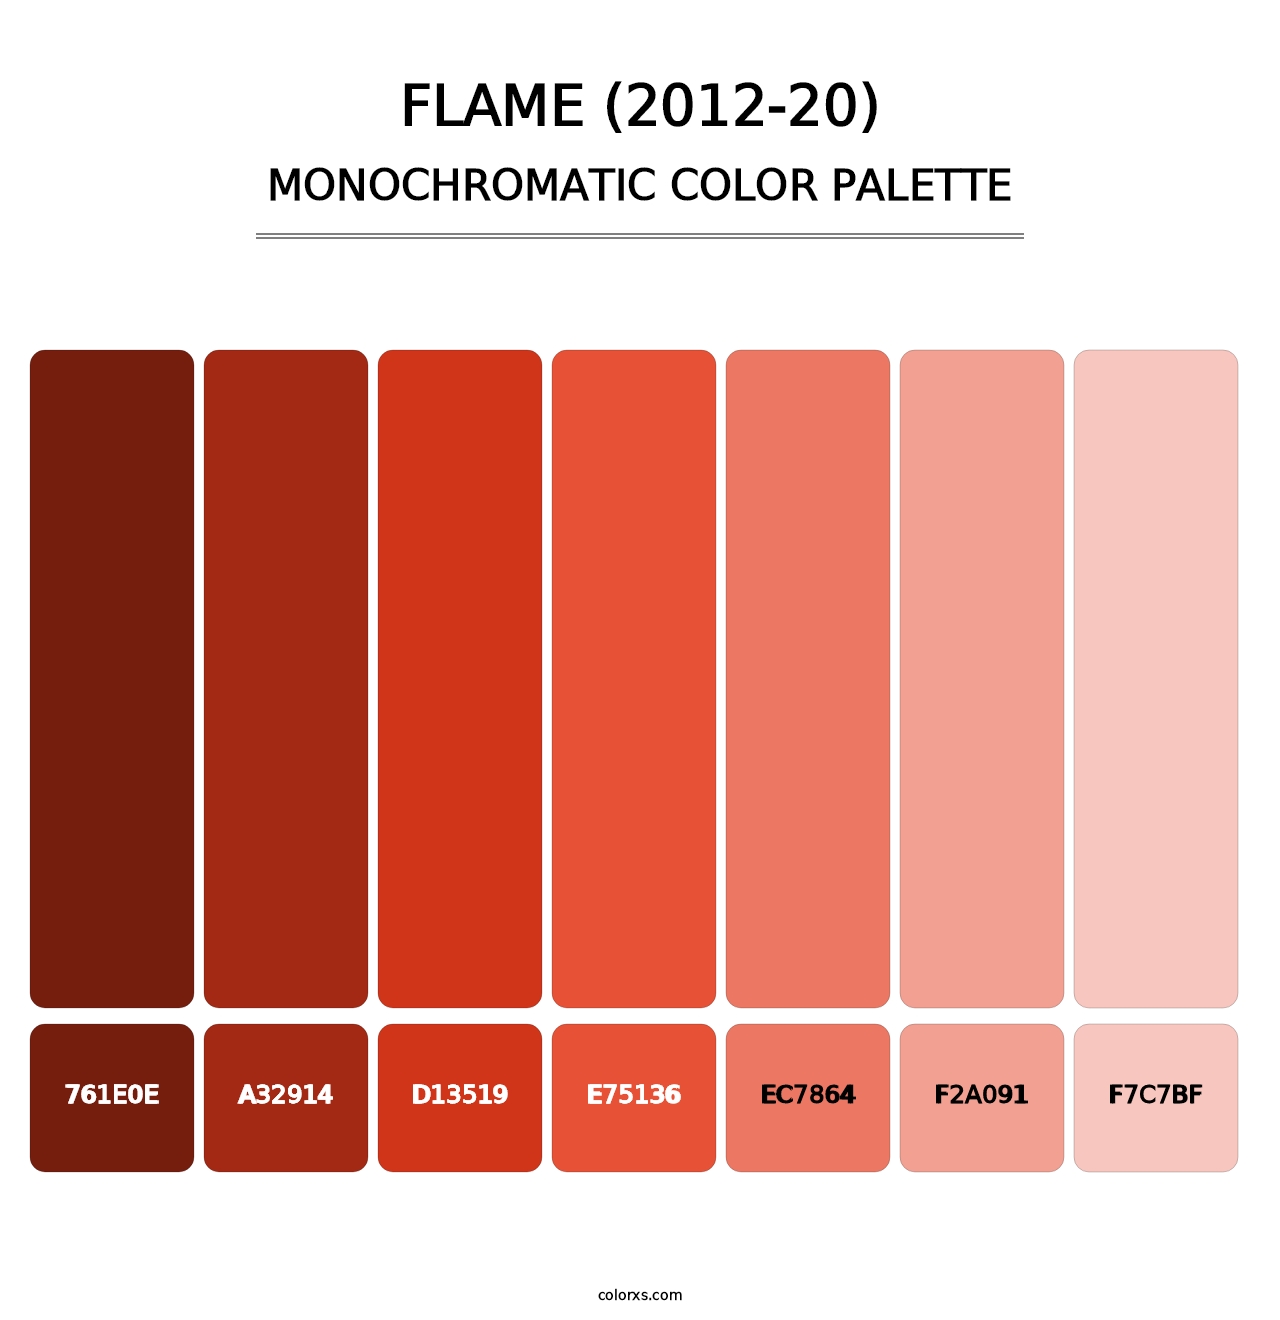 Flame (2012-20) - Monochromatic Color Palette